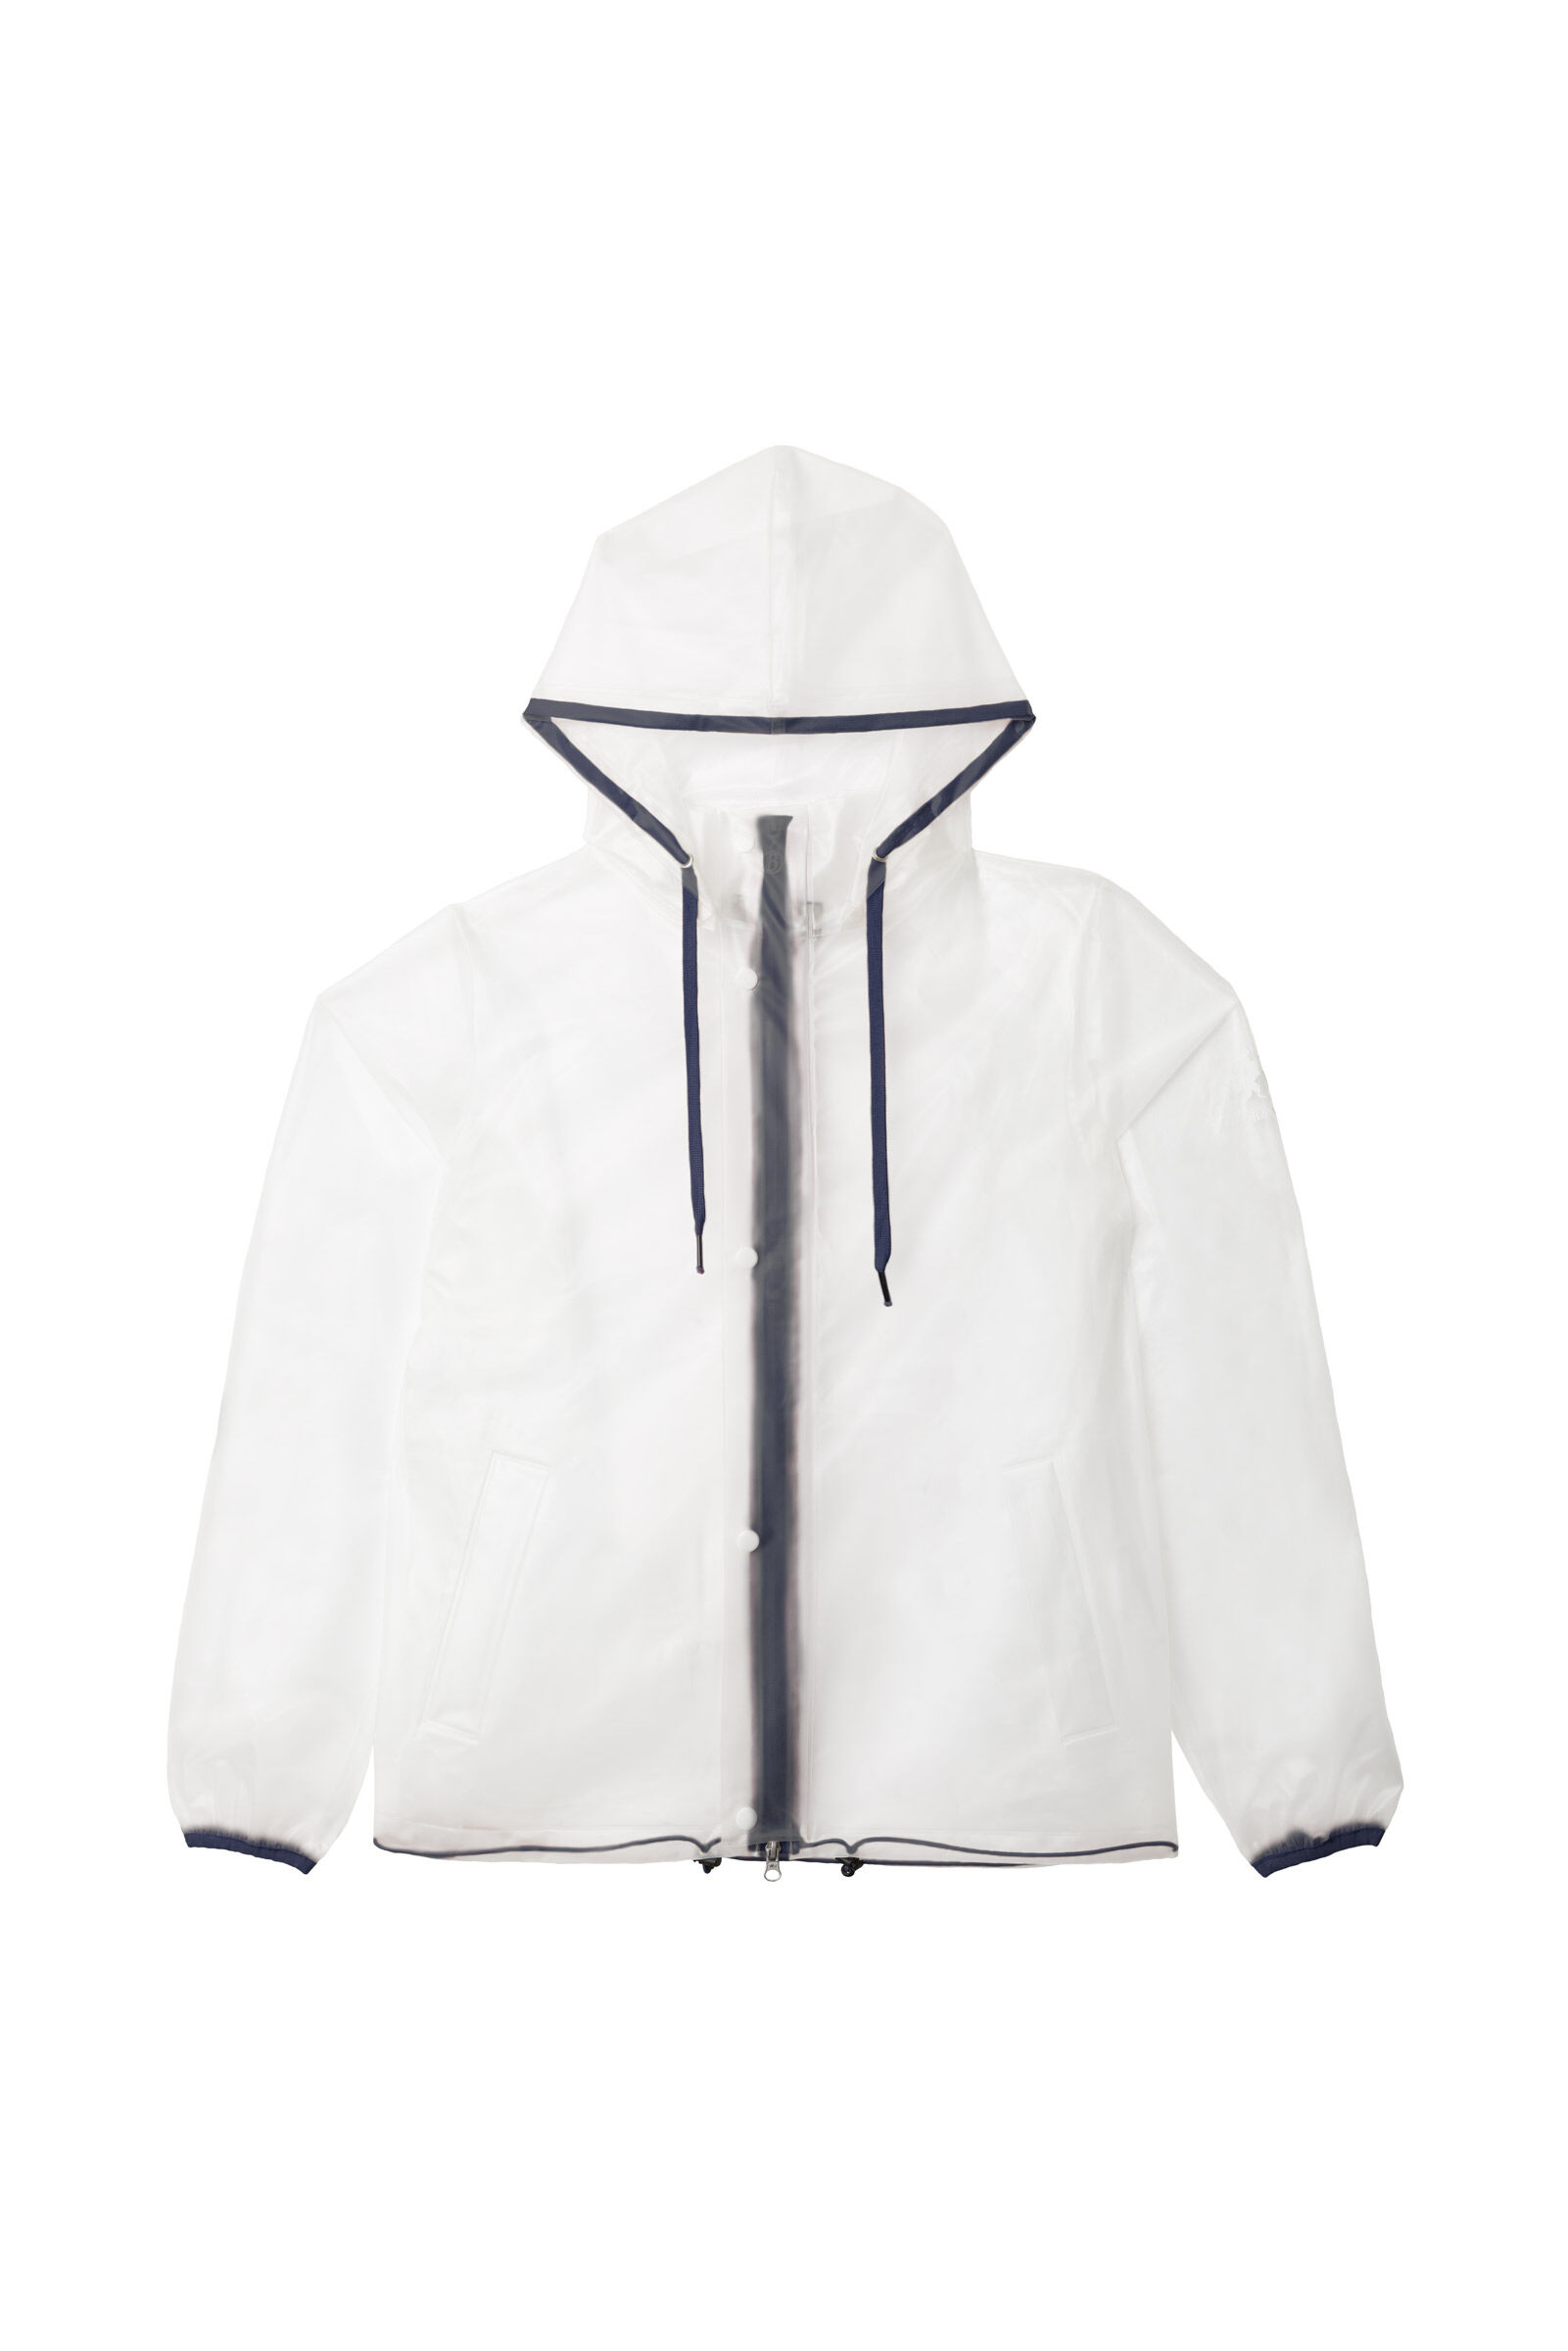 Comprar MakeWishes - Chubasquero transparente con capucha para mujer,  chaqueta larga, impermeable, ropa para lluvia al aire libre